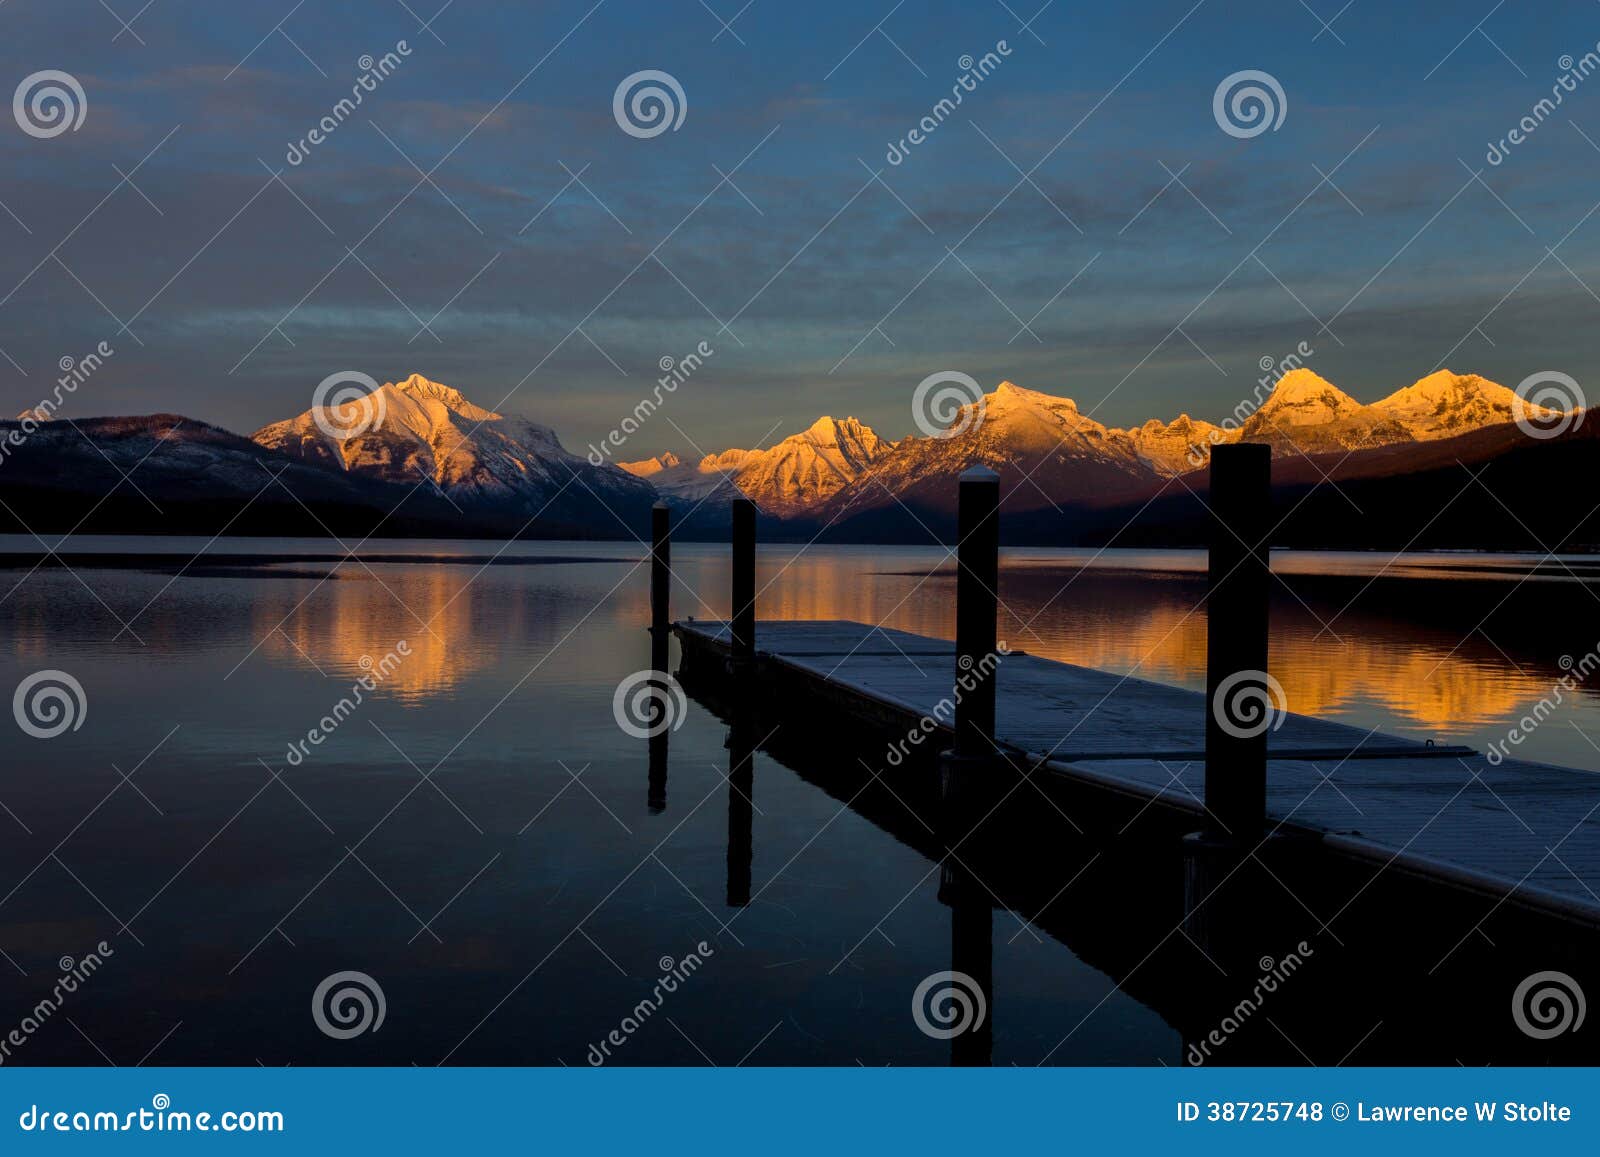 sunset, mountains, reflection, lake, dock